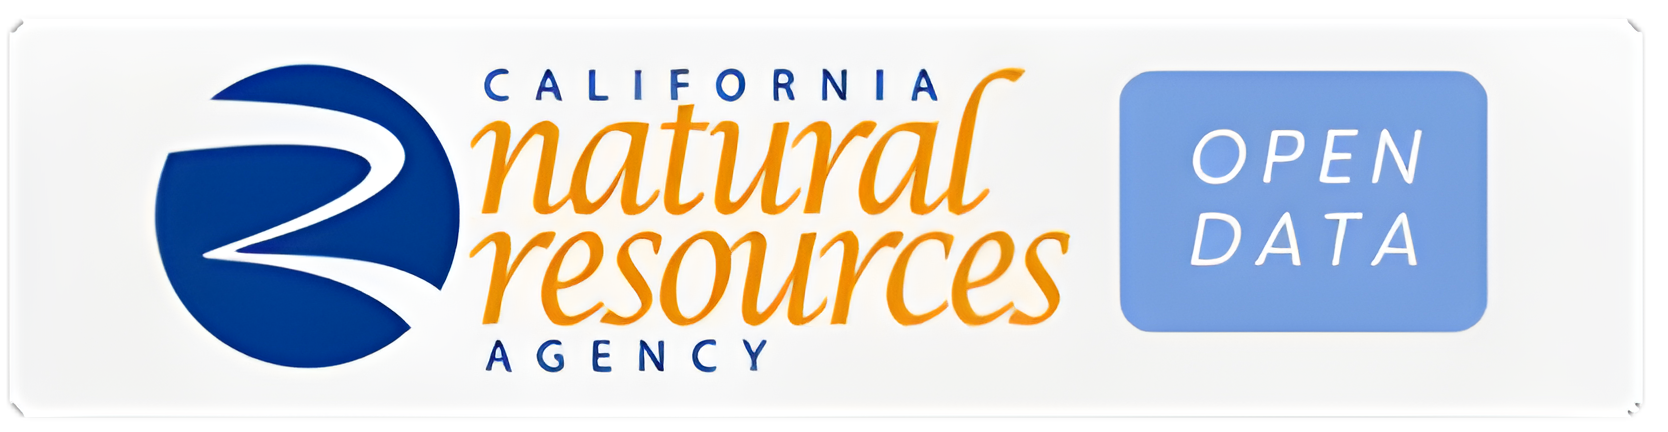 california natural resources agency logo